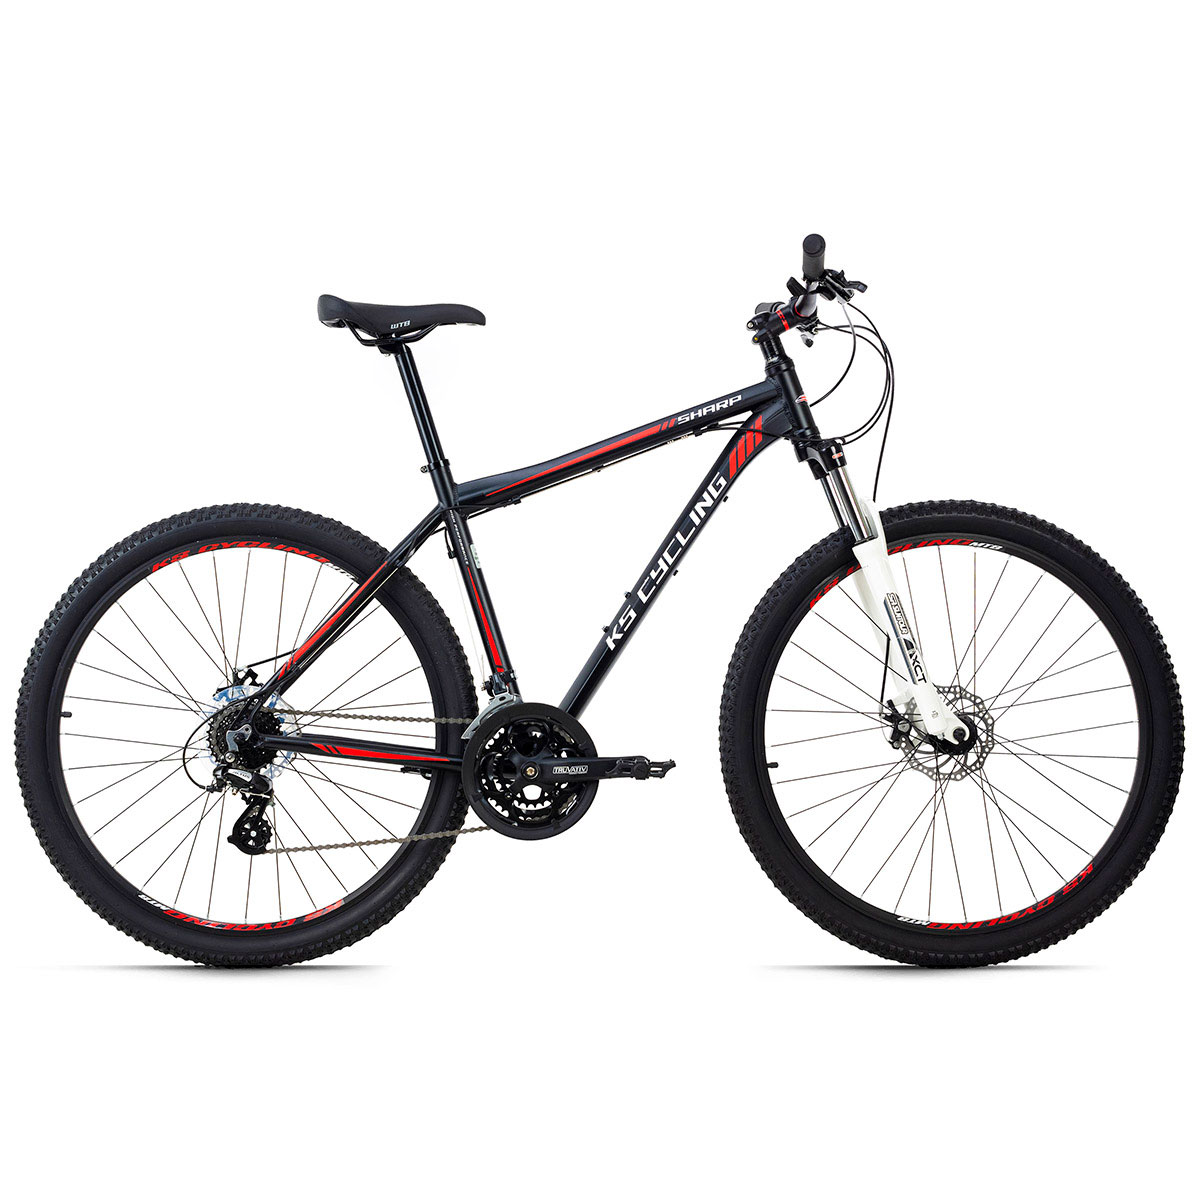 Mountainbike „Sharp“, Hardtail, 29 Zoll, 24 Gänge, schwarz-rot